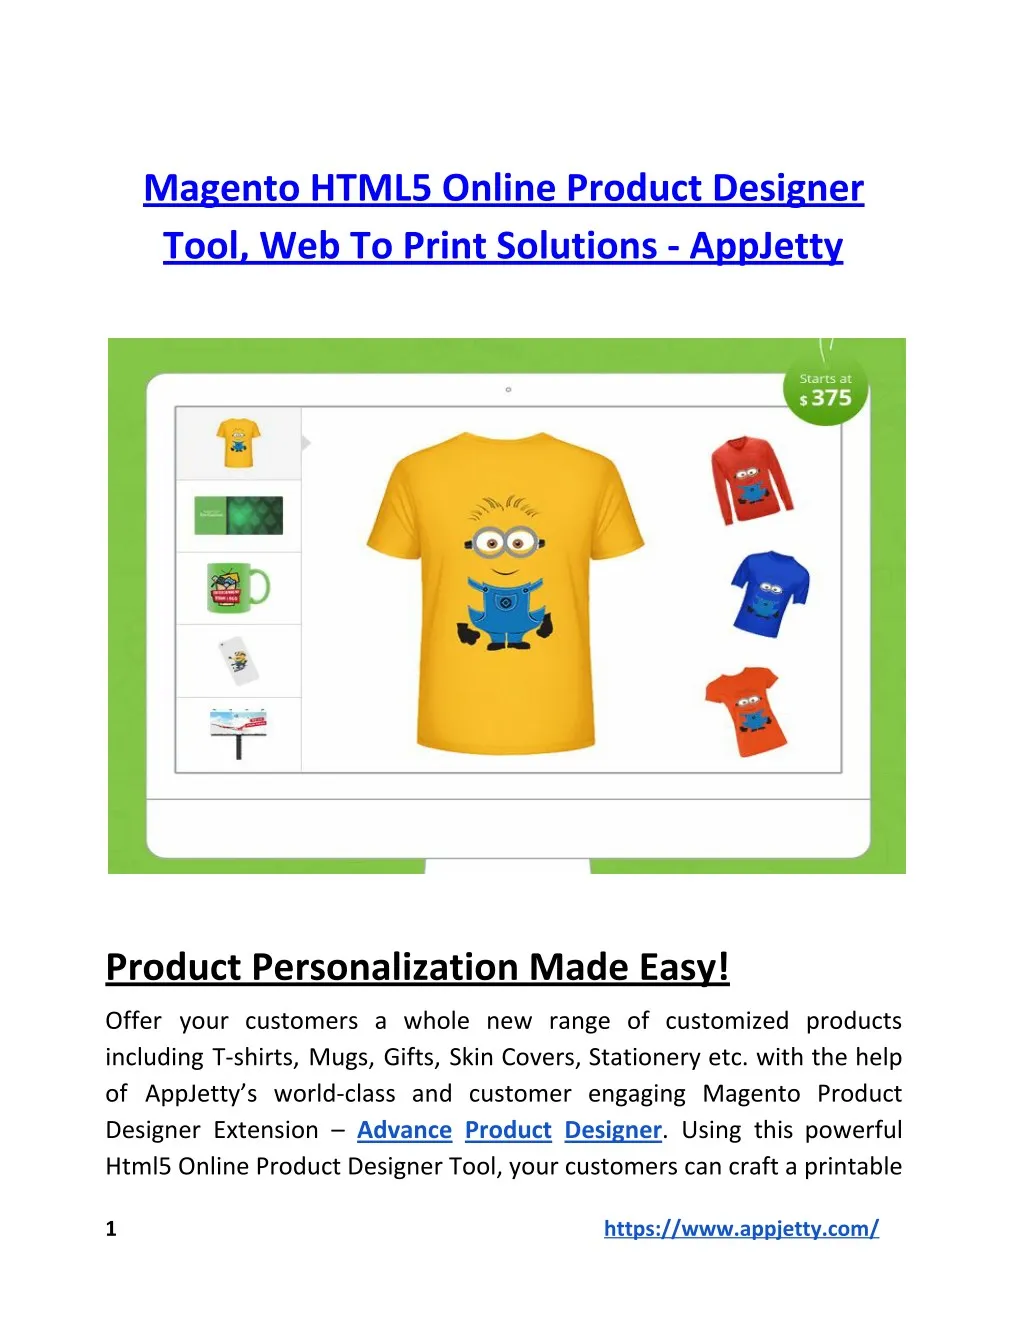 magento html5 online product designer tool